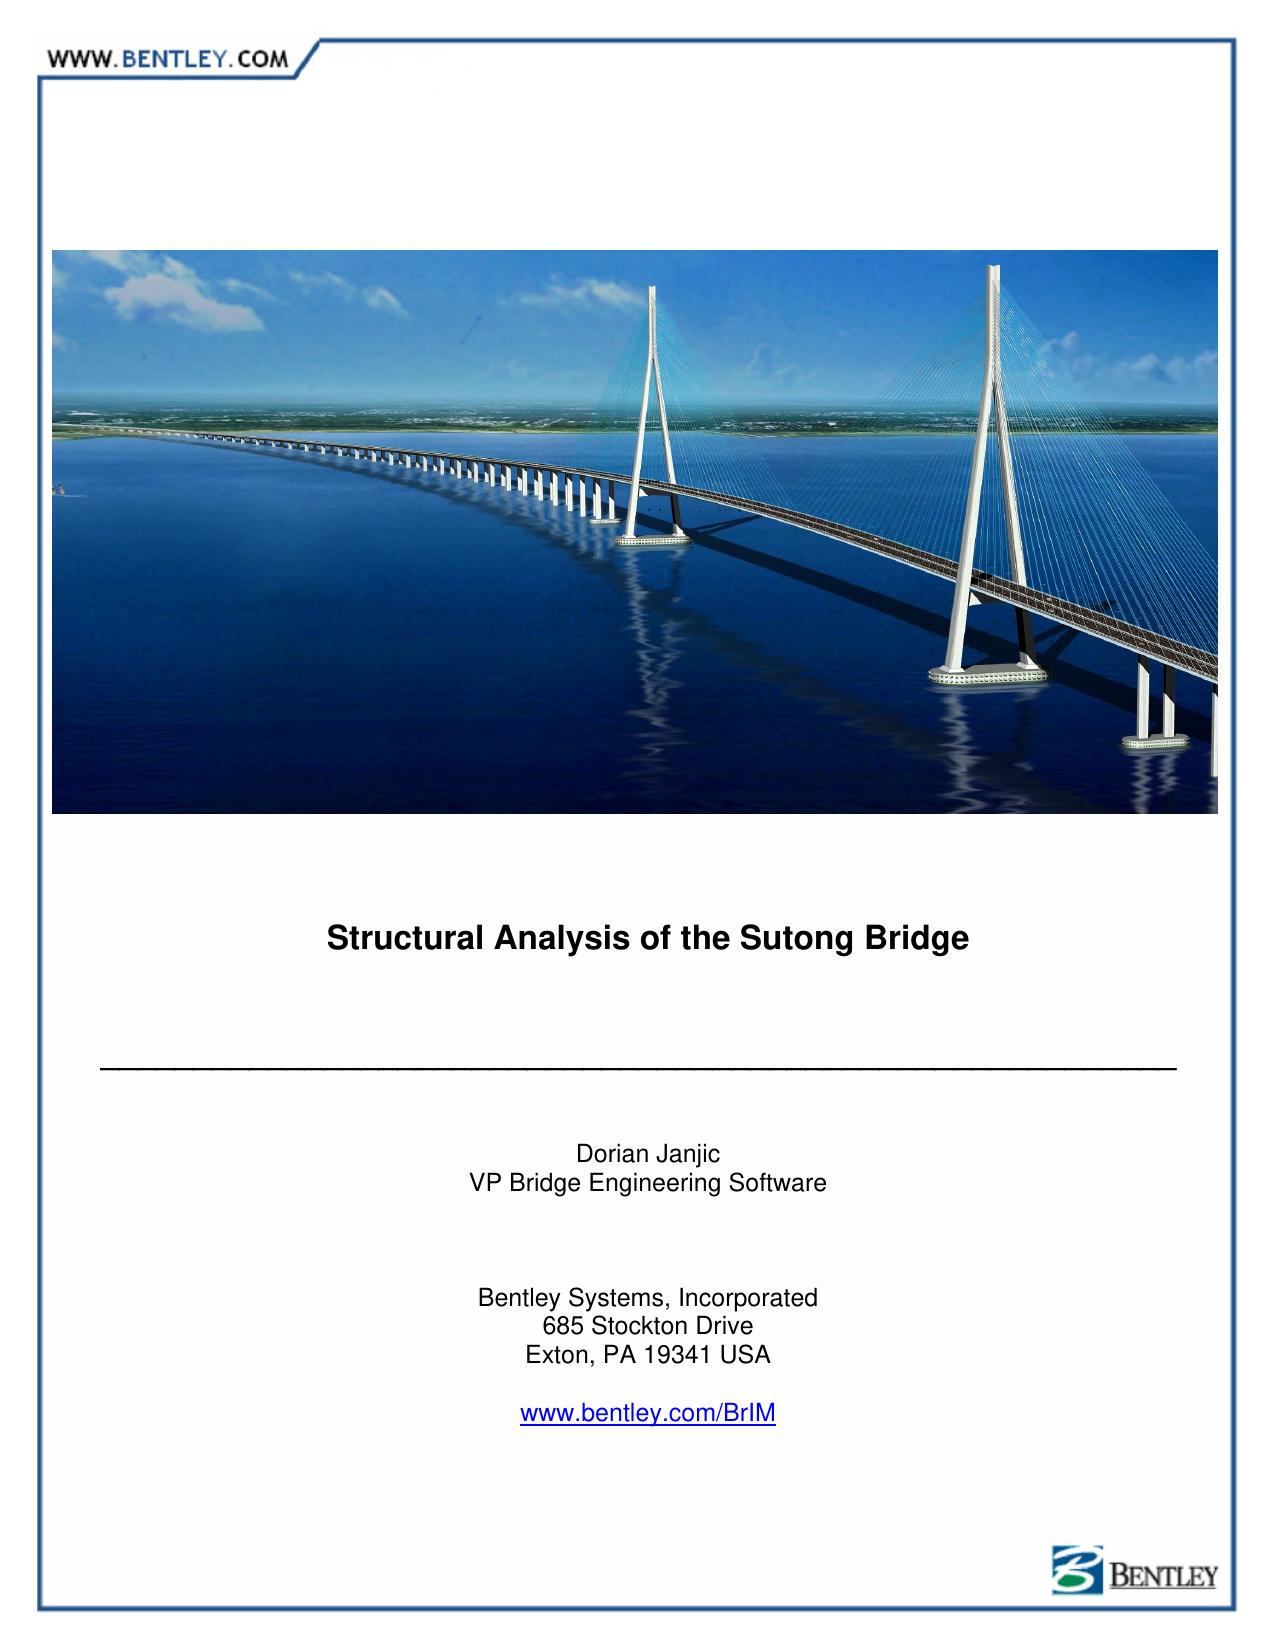 StructuralAnalysis-Sutong Bridge